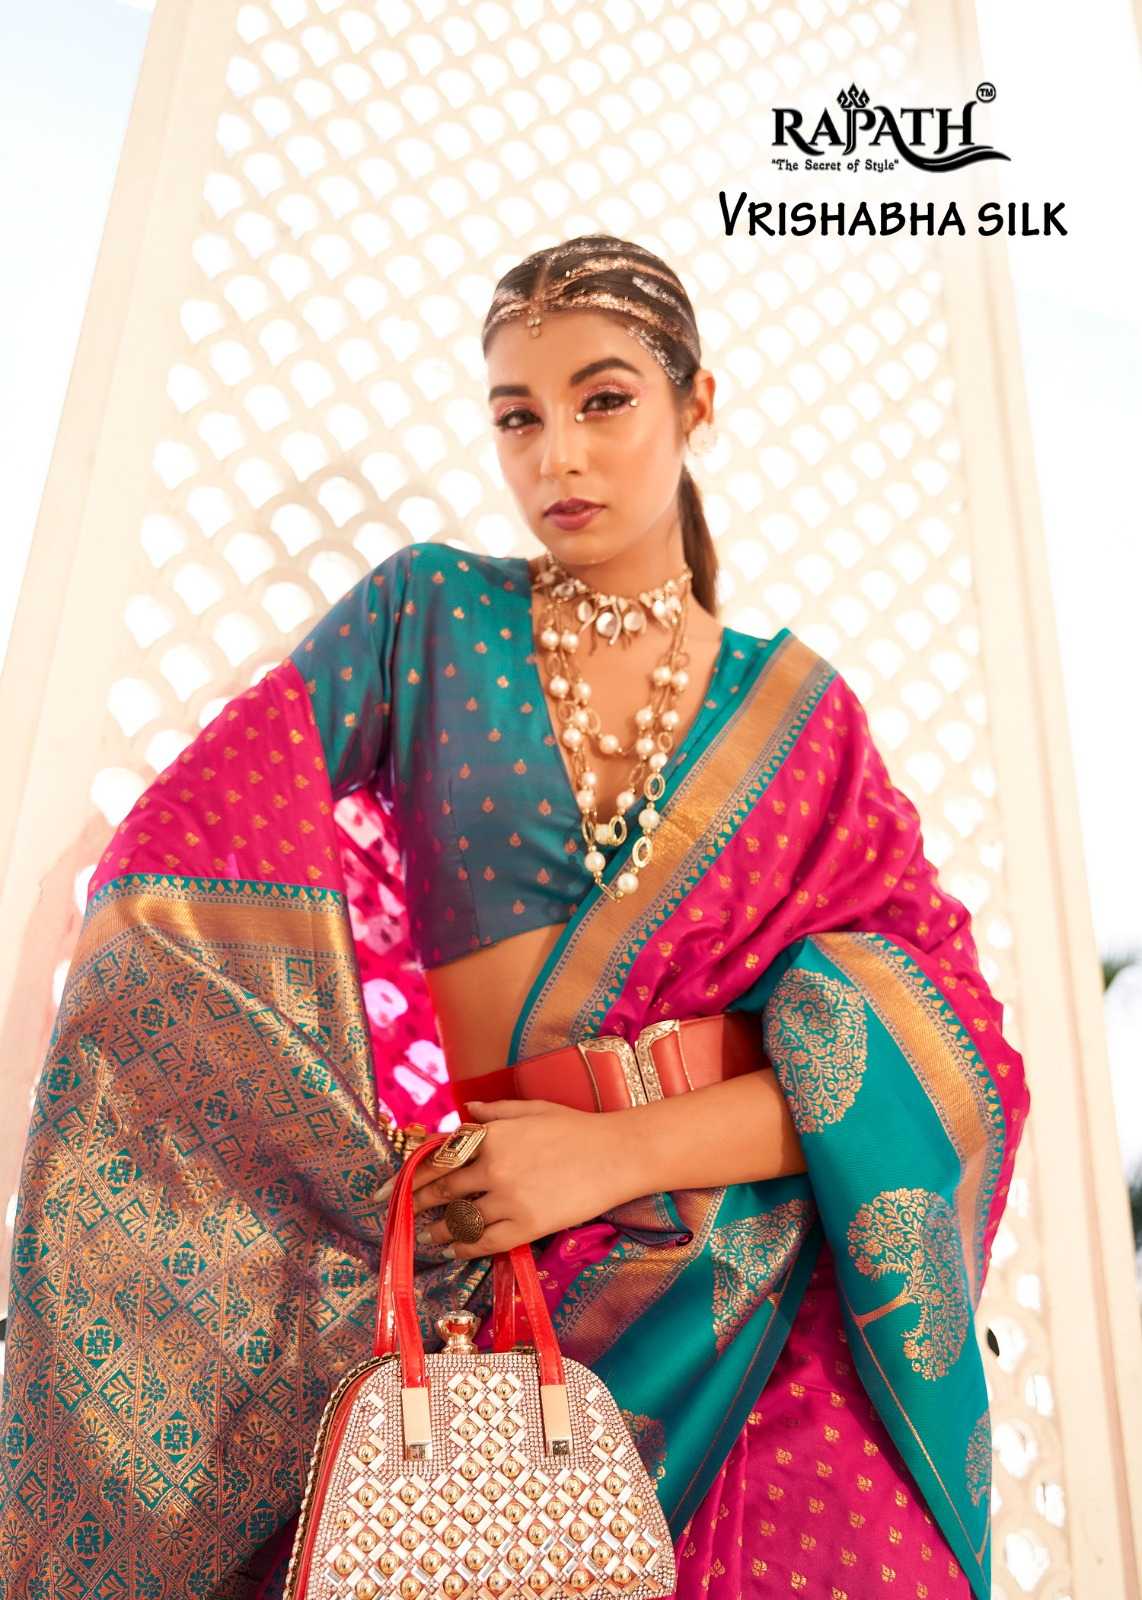 rajpath vrishabha silk soft banarasi saree collection 